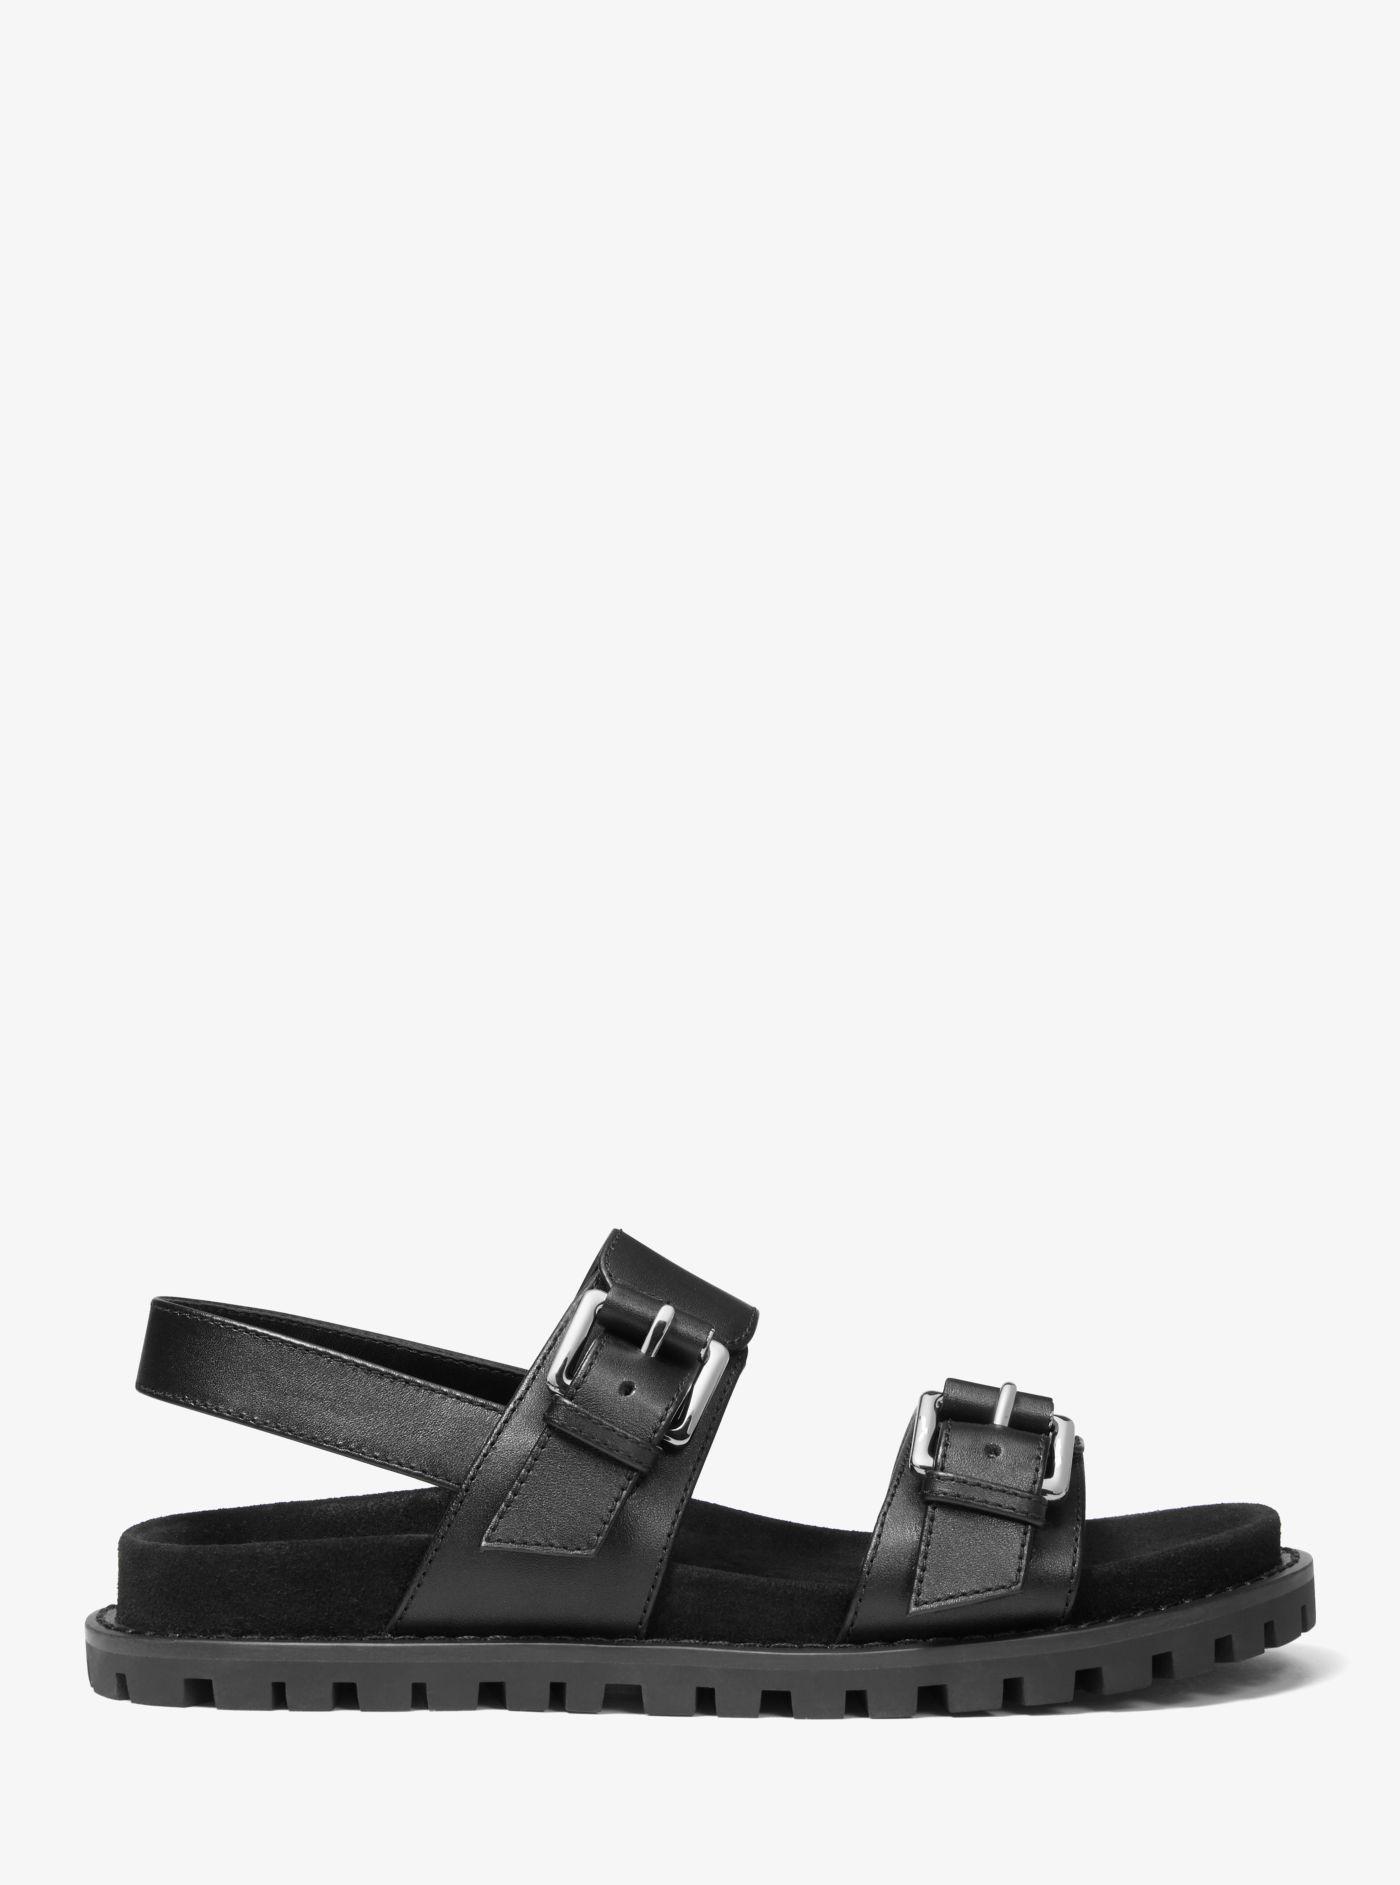 Michael Kors Judd Leather Sandal in Black | Lyst